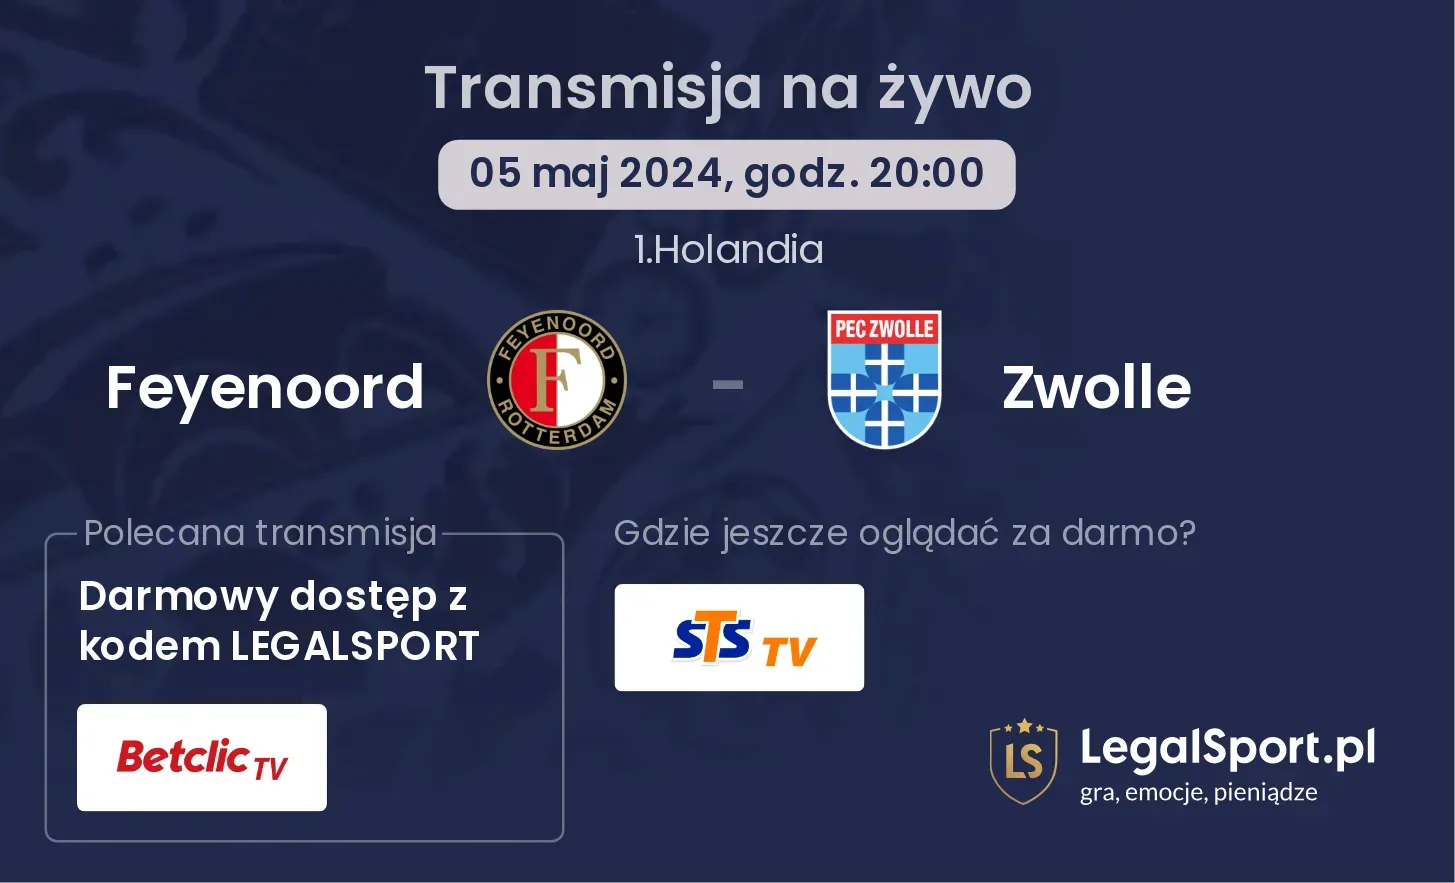 Feyenoord - Zwolle transmisja na żywo